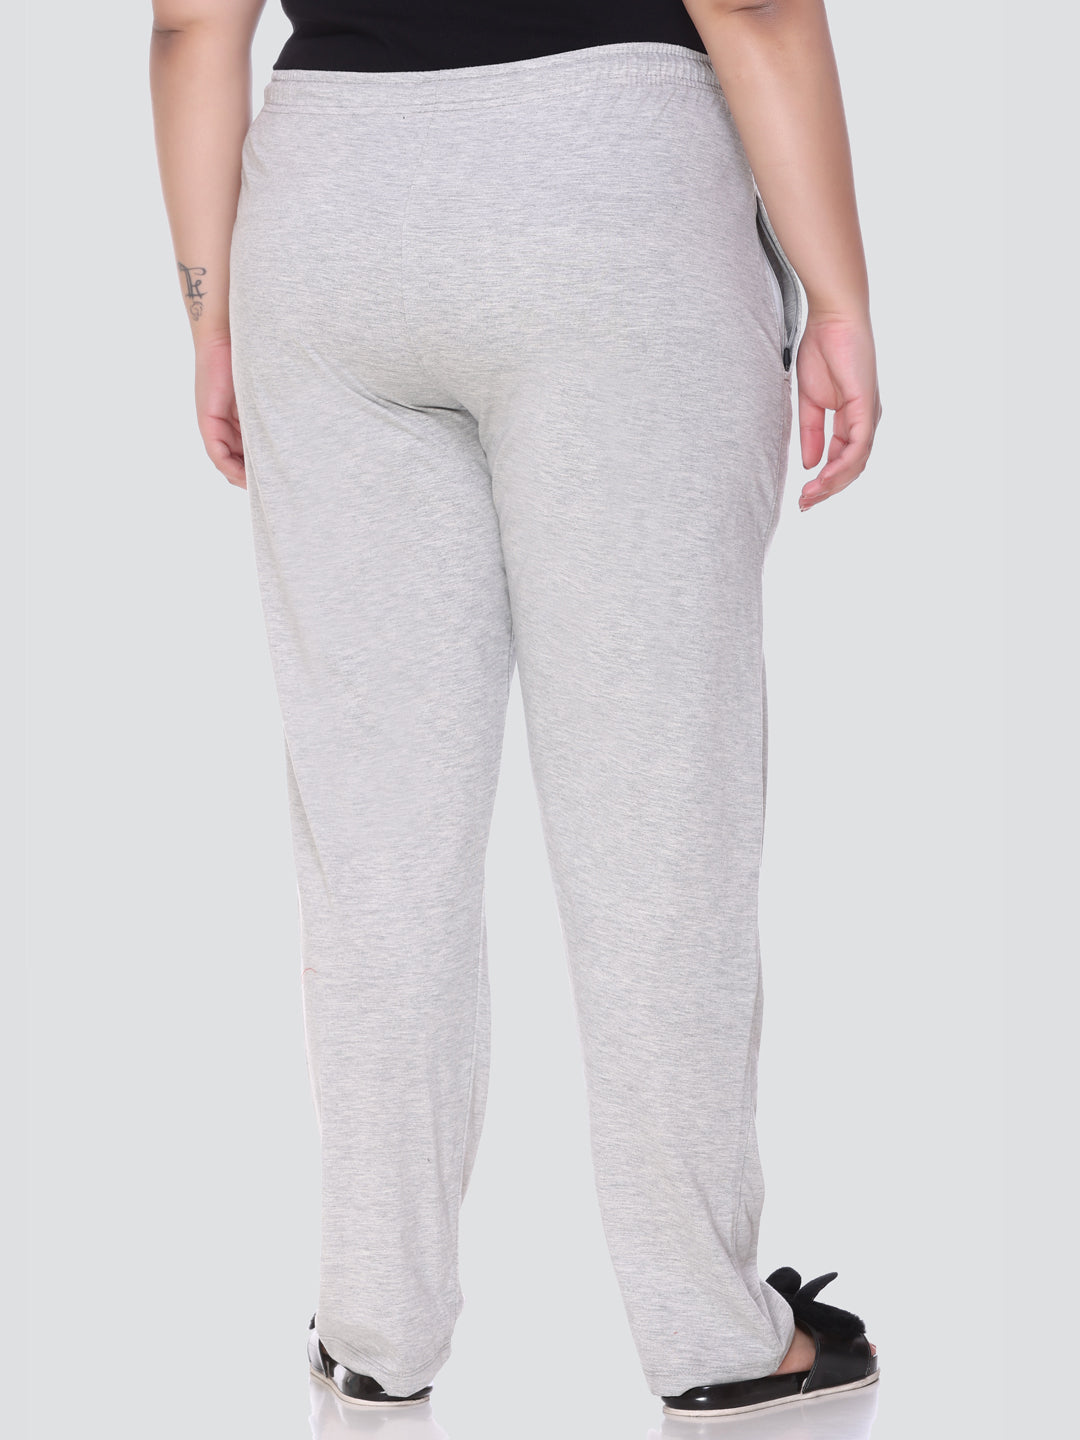 Buy Leebonee Women Regular fit Polyester Solid Track pants - Black Online  at 25% off. |Paytm Mall